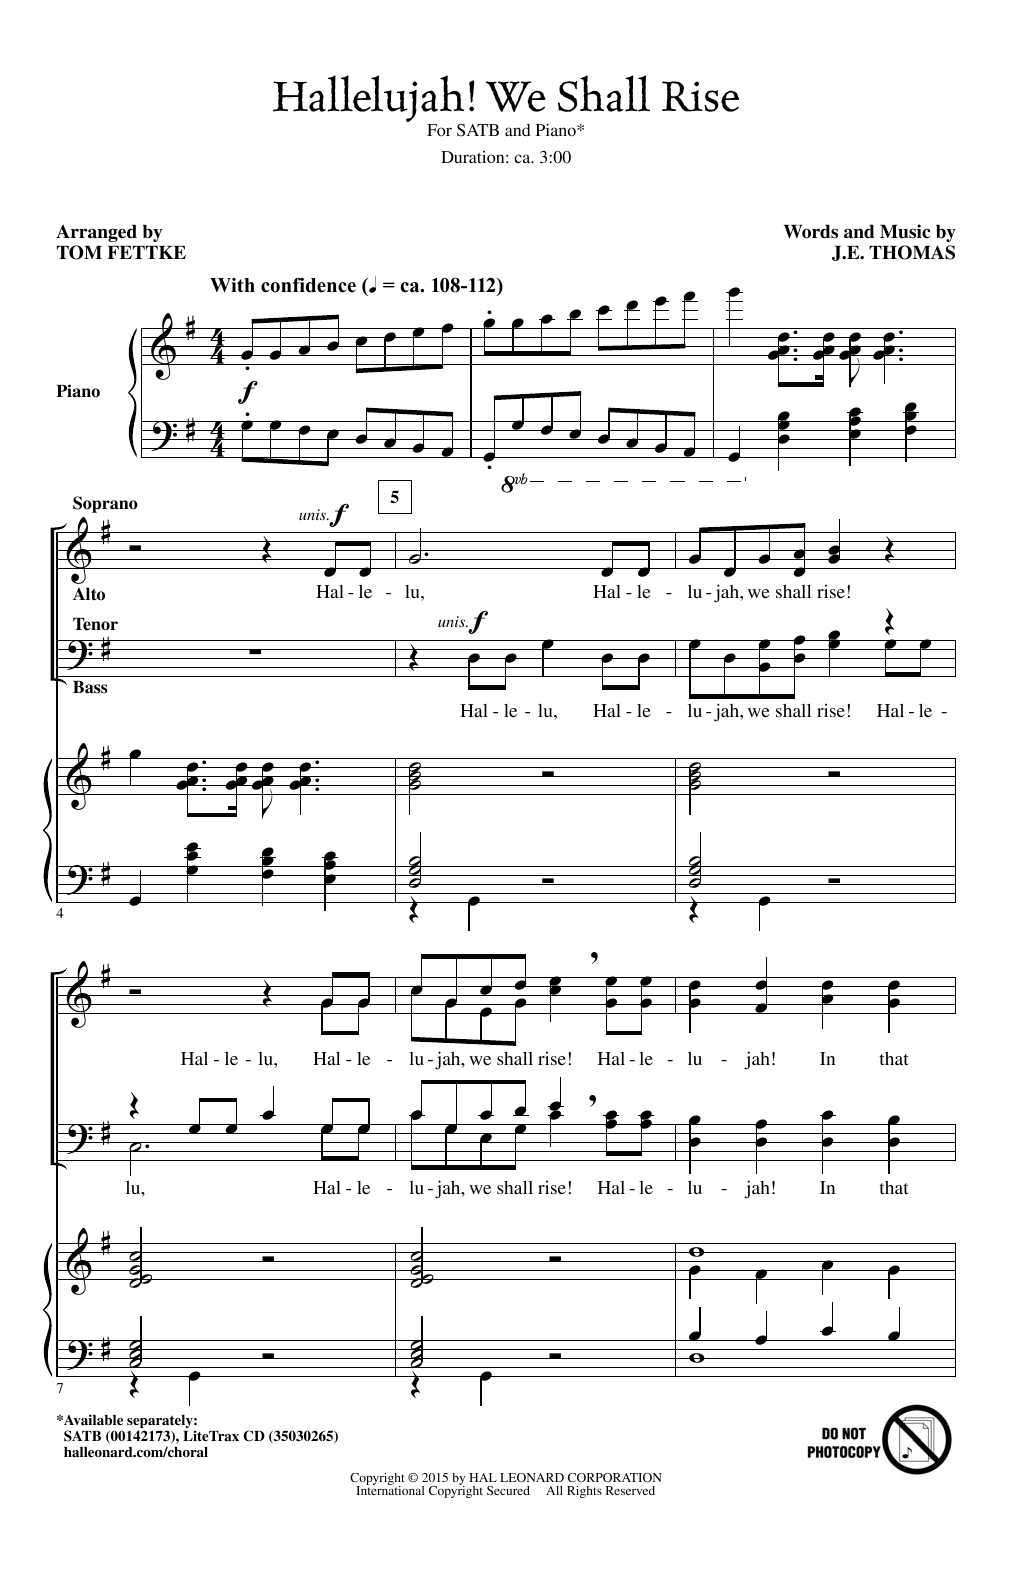 J.E. Thomas Hallelujah! We Shall Rise (arr. Tom Fettke) Sheet Music Notes & Chords for SATB - Download or Print PDF